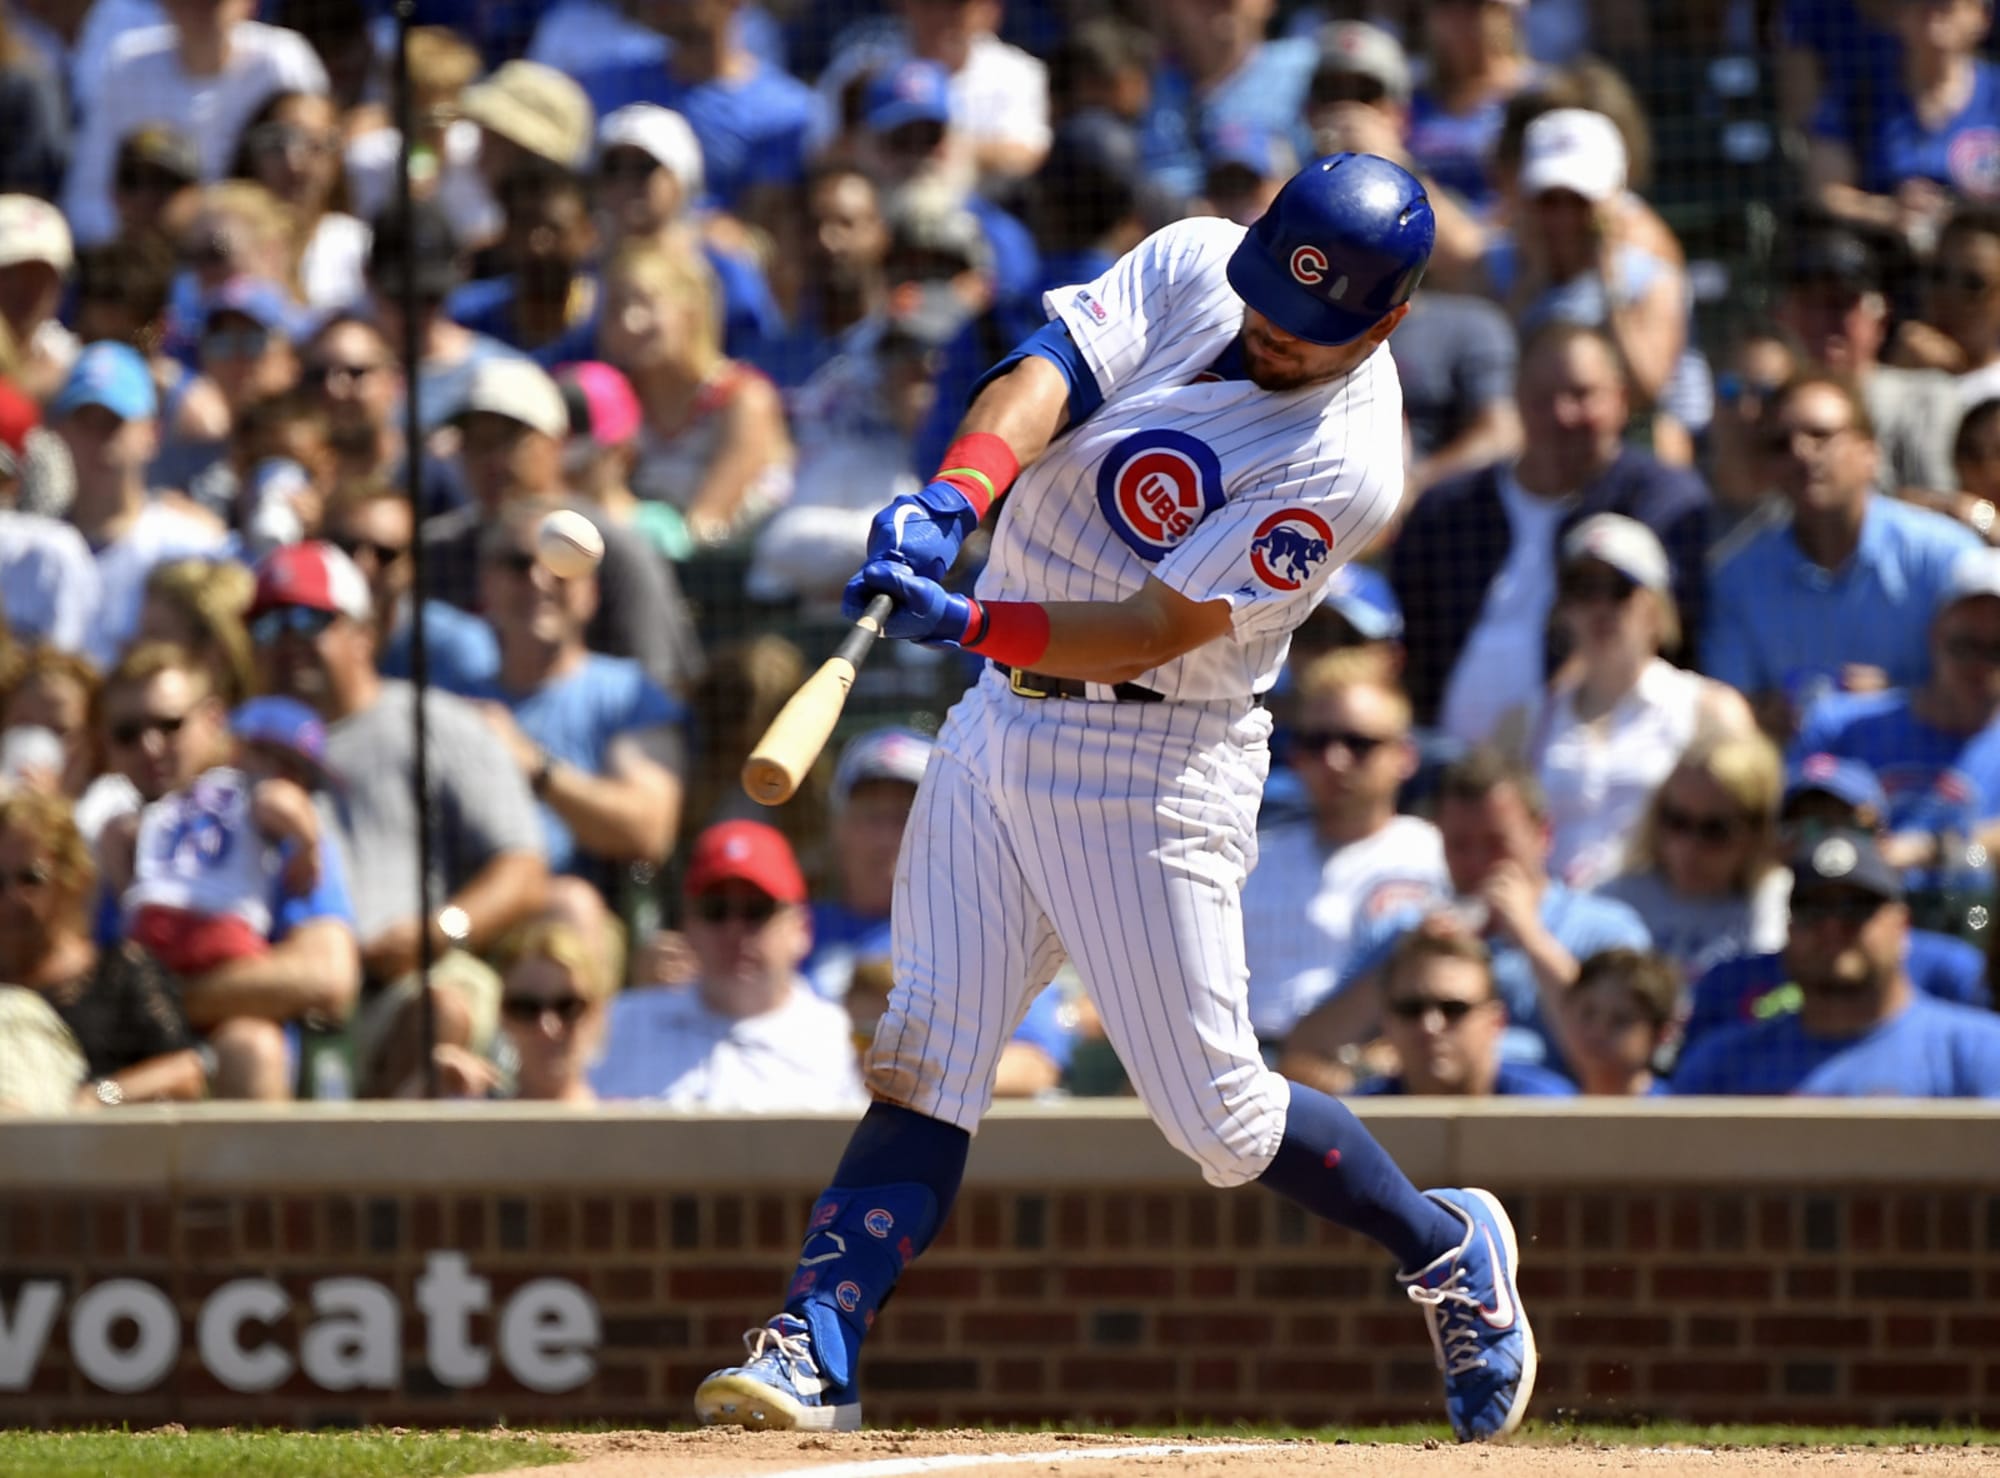 Indiana Baseball: Kyle Schwarber sets Chicago Cubs record